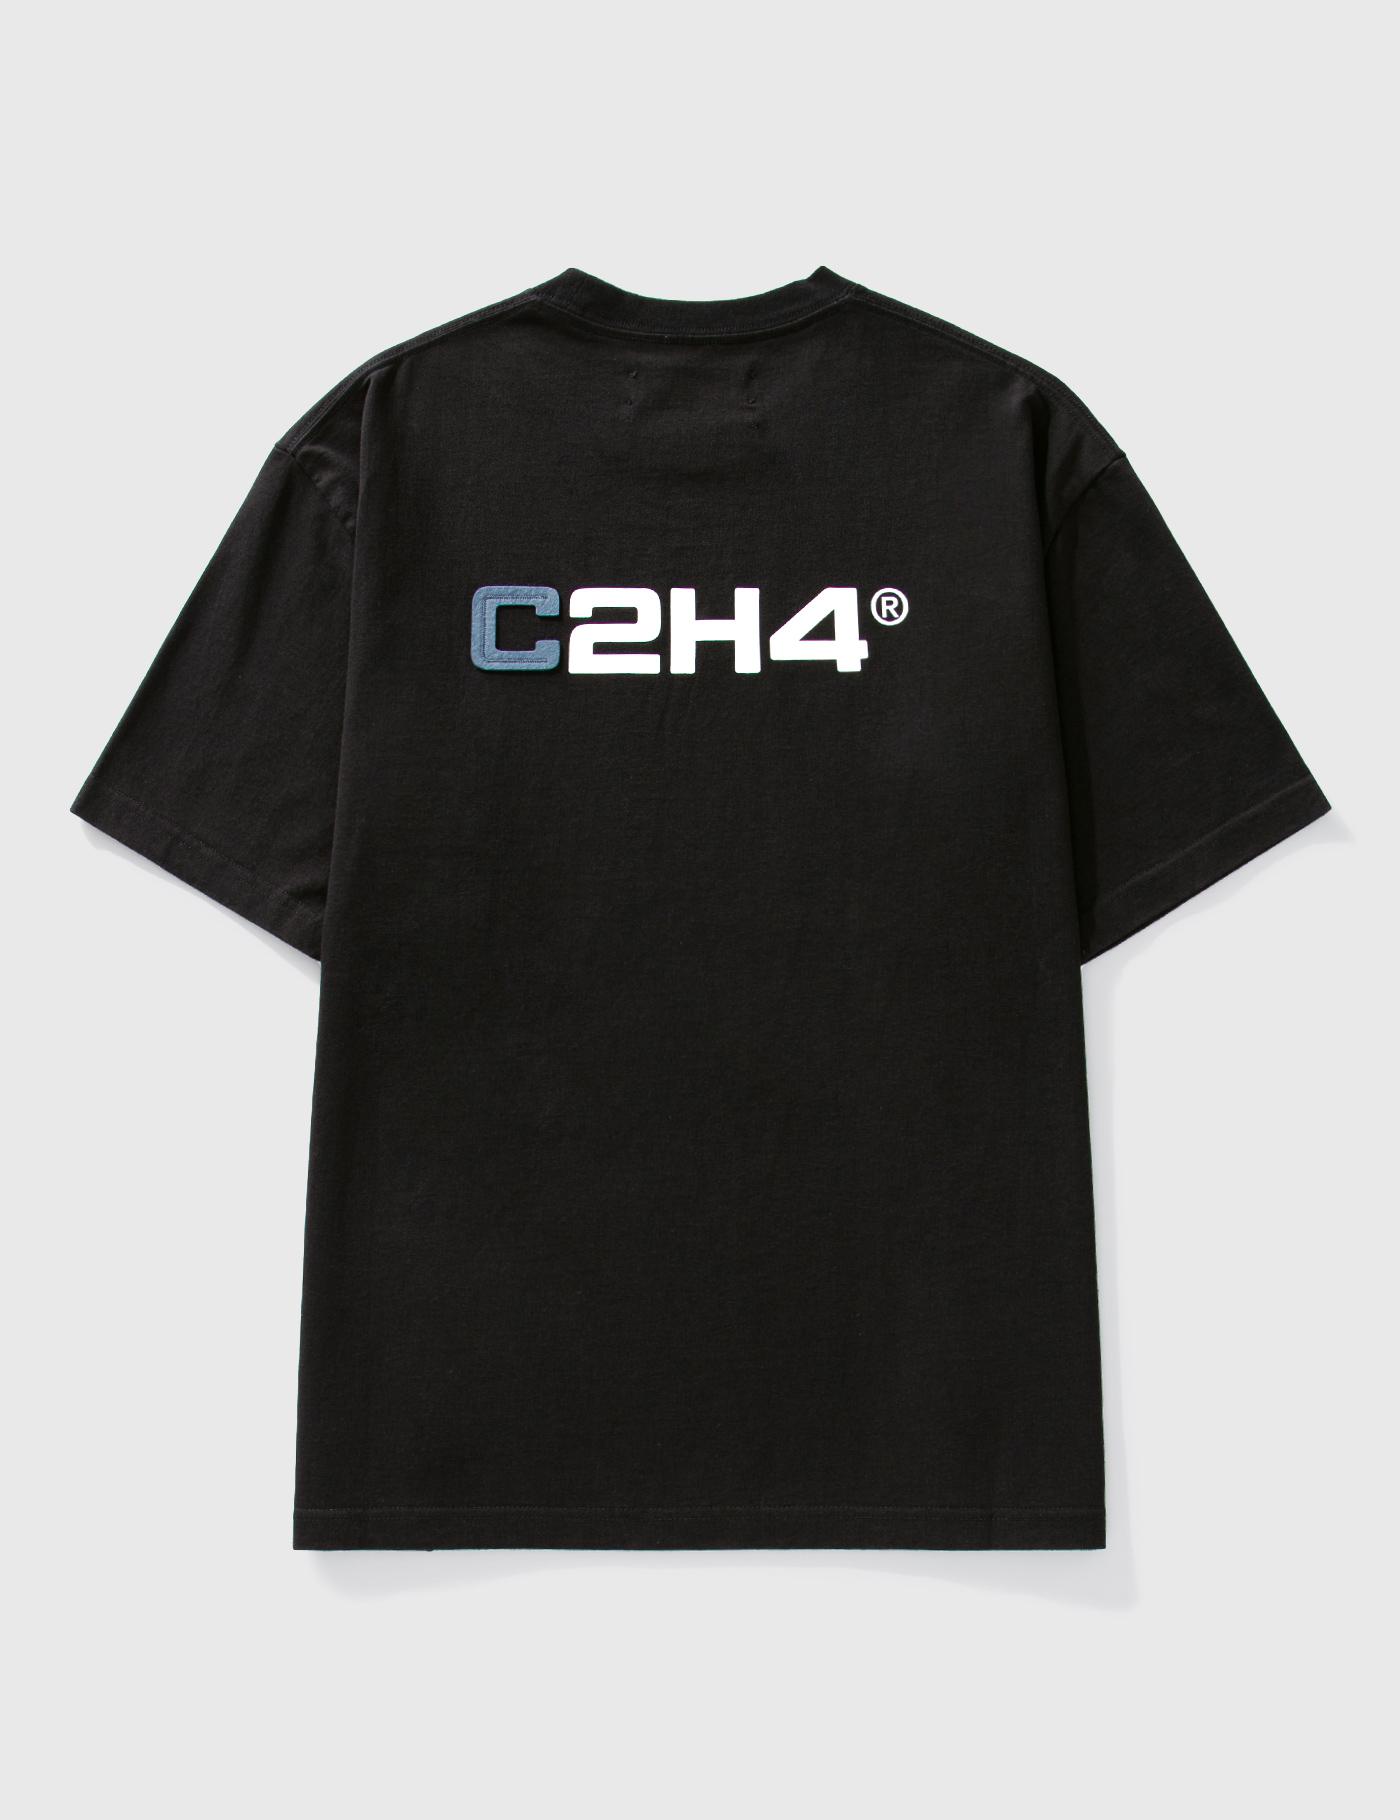 Staff Uniform Staff Logo T-shirt by C2H4